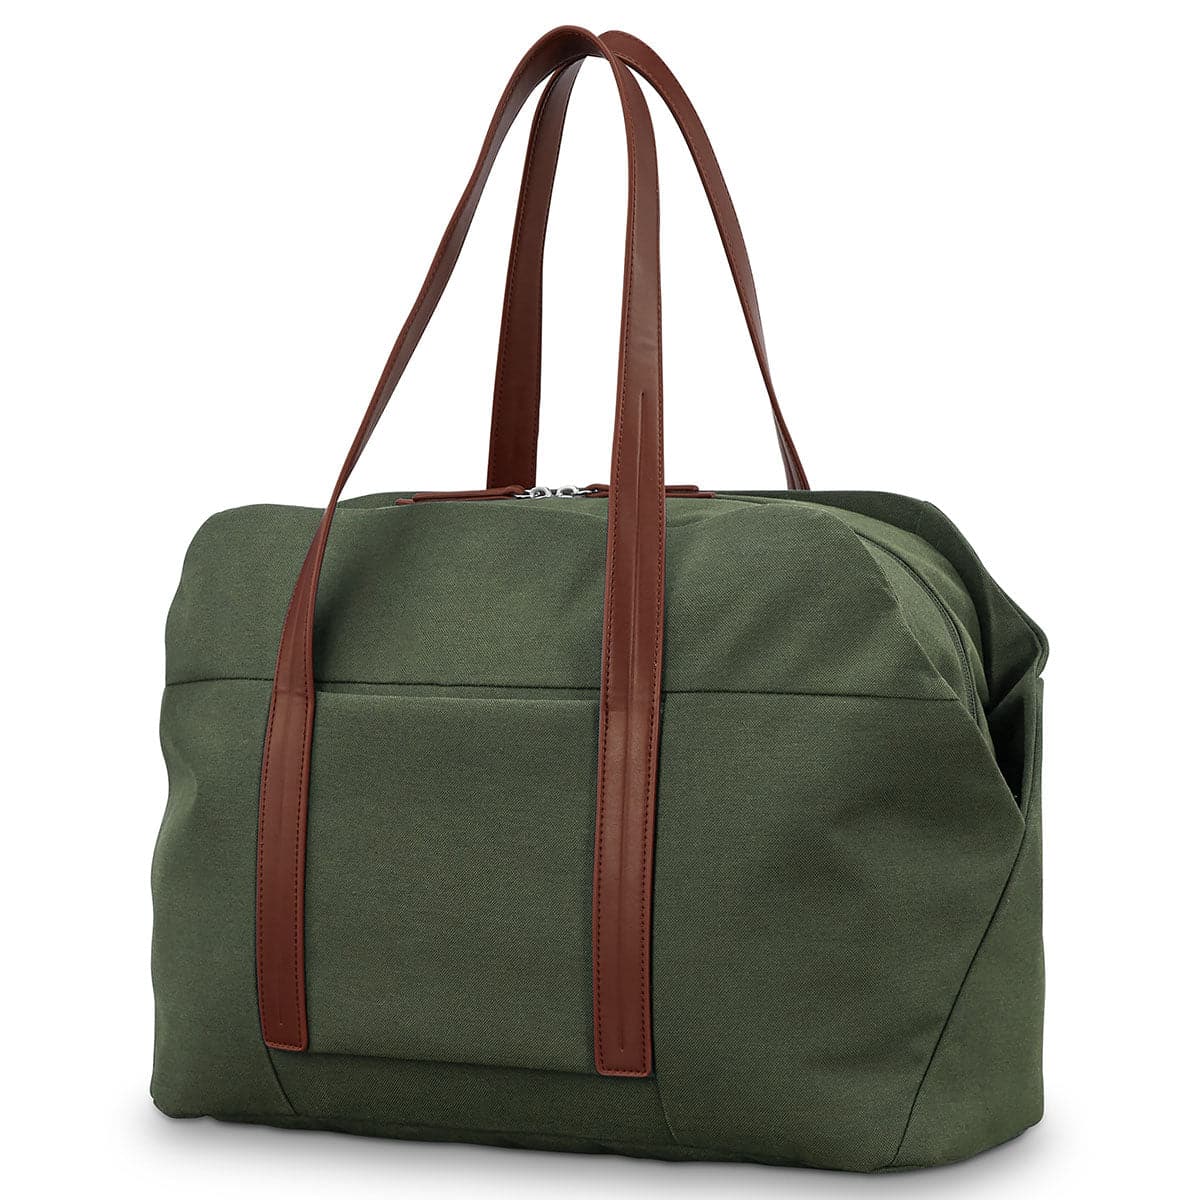 Samsonite Virtuosa Weekender Duffle Bag